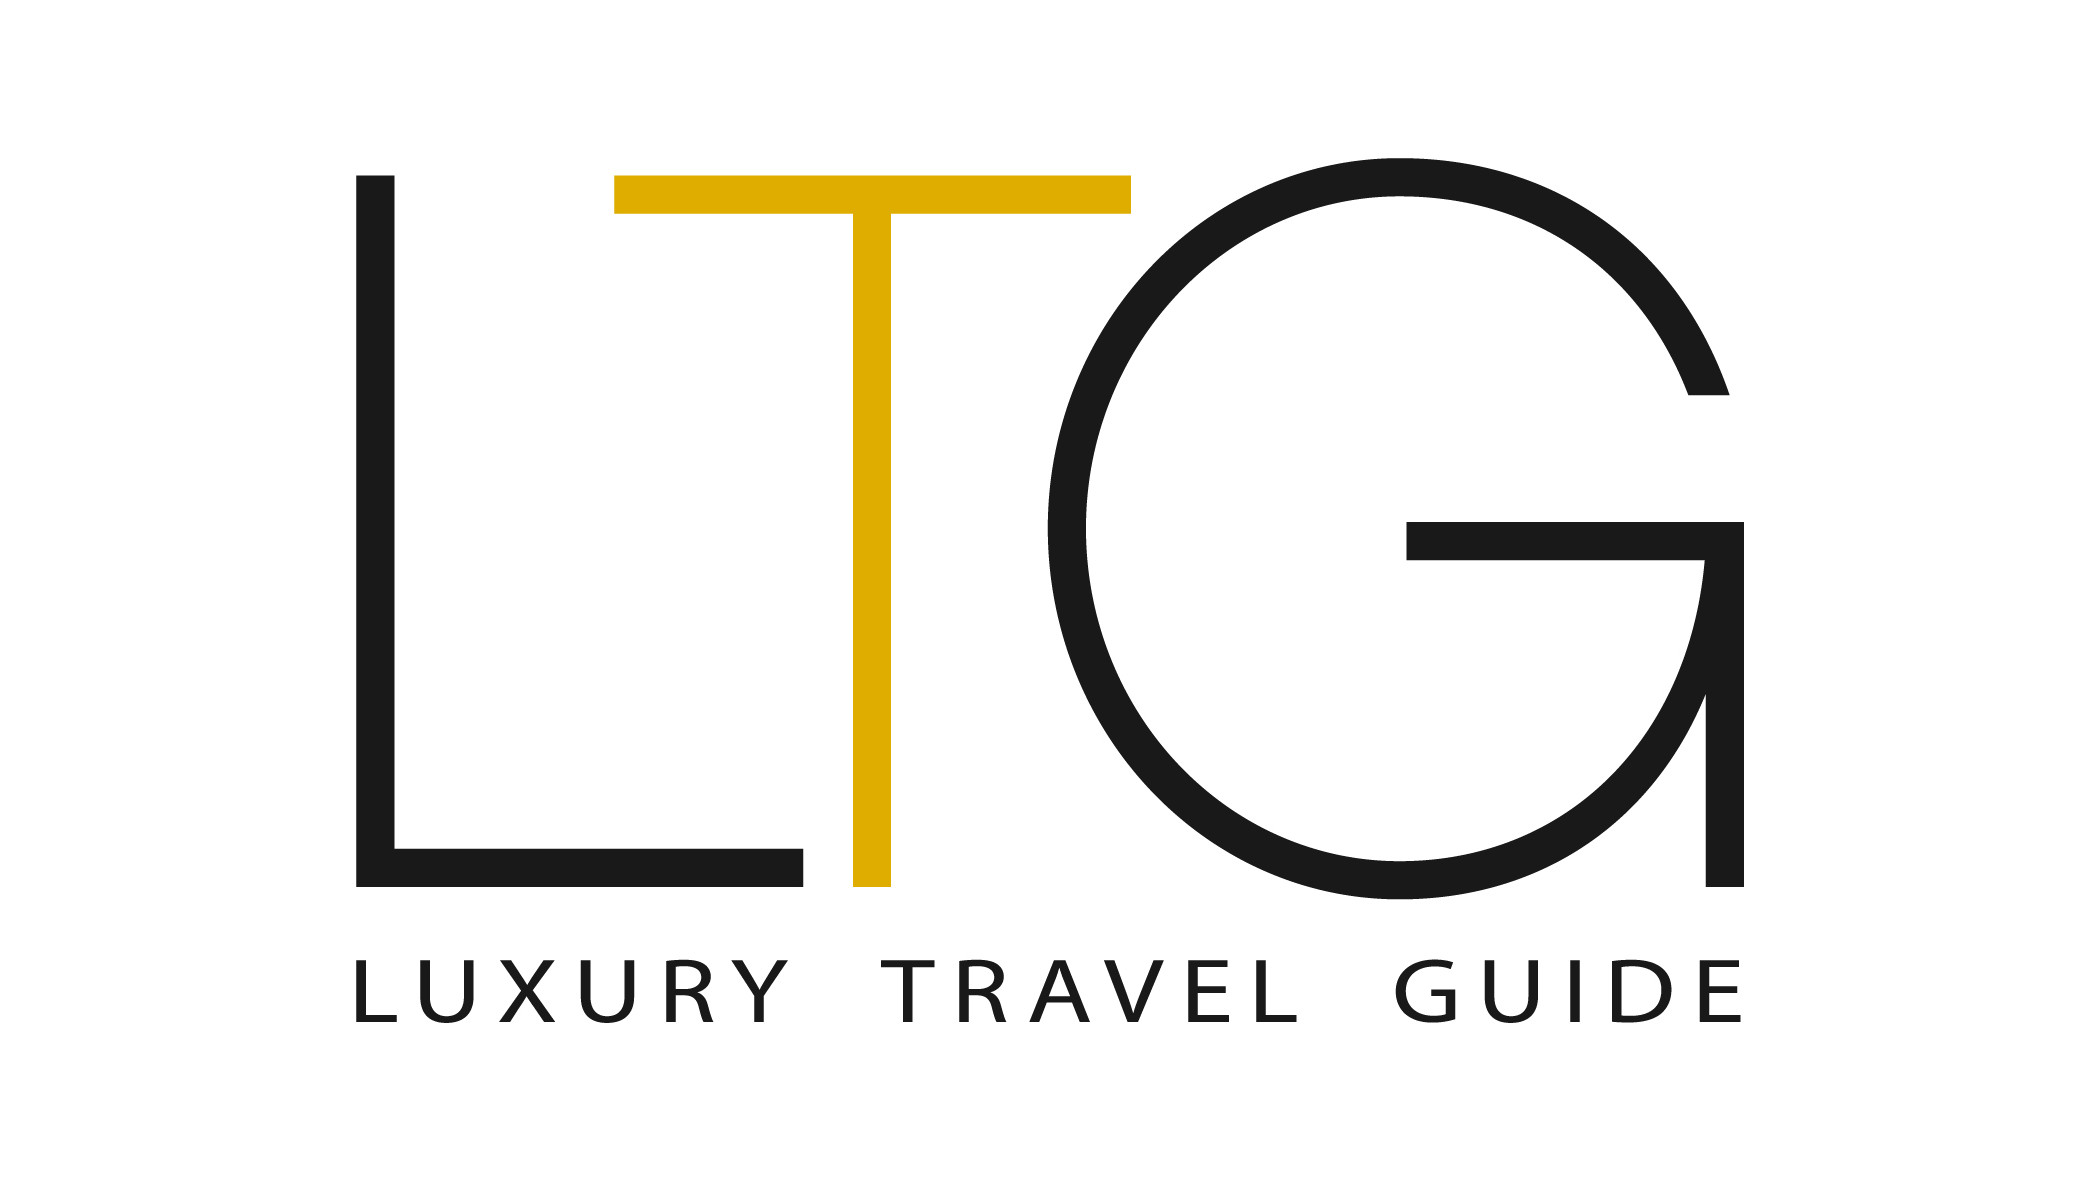 Luxury Travel Guide Global Awards SponsorMyEvent